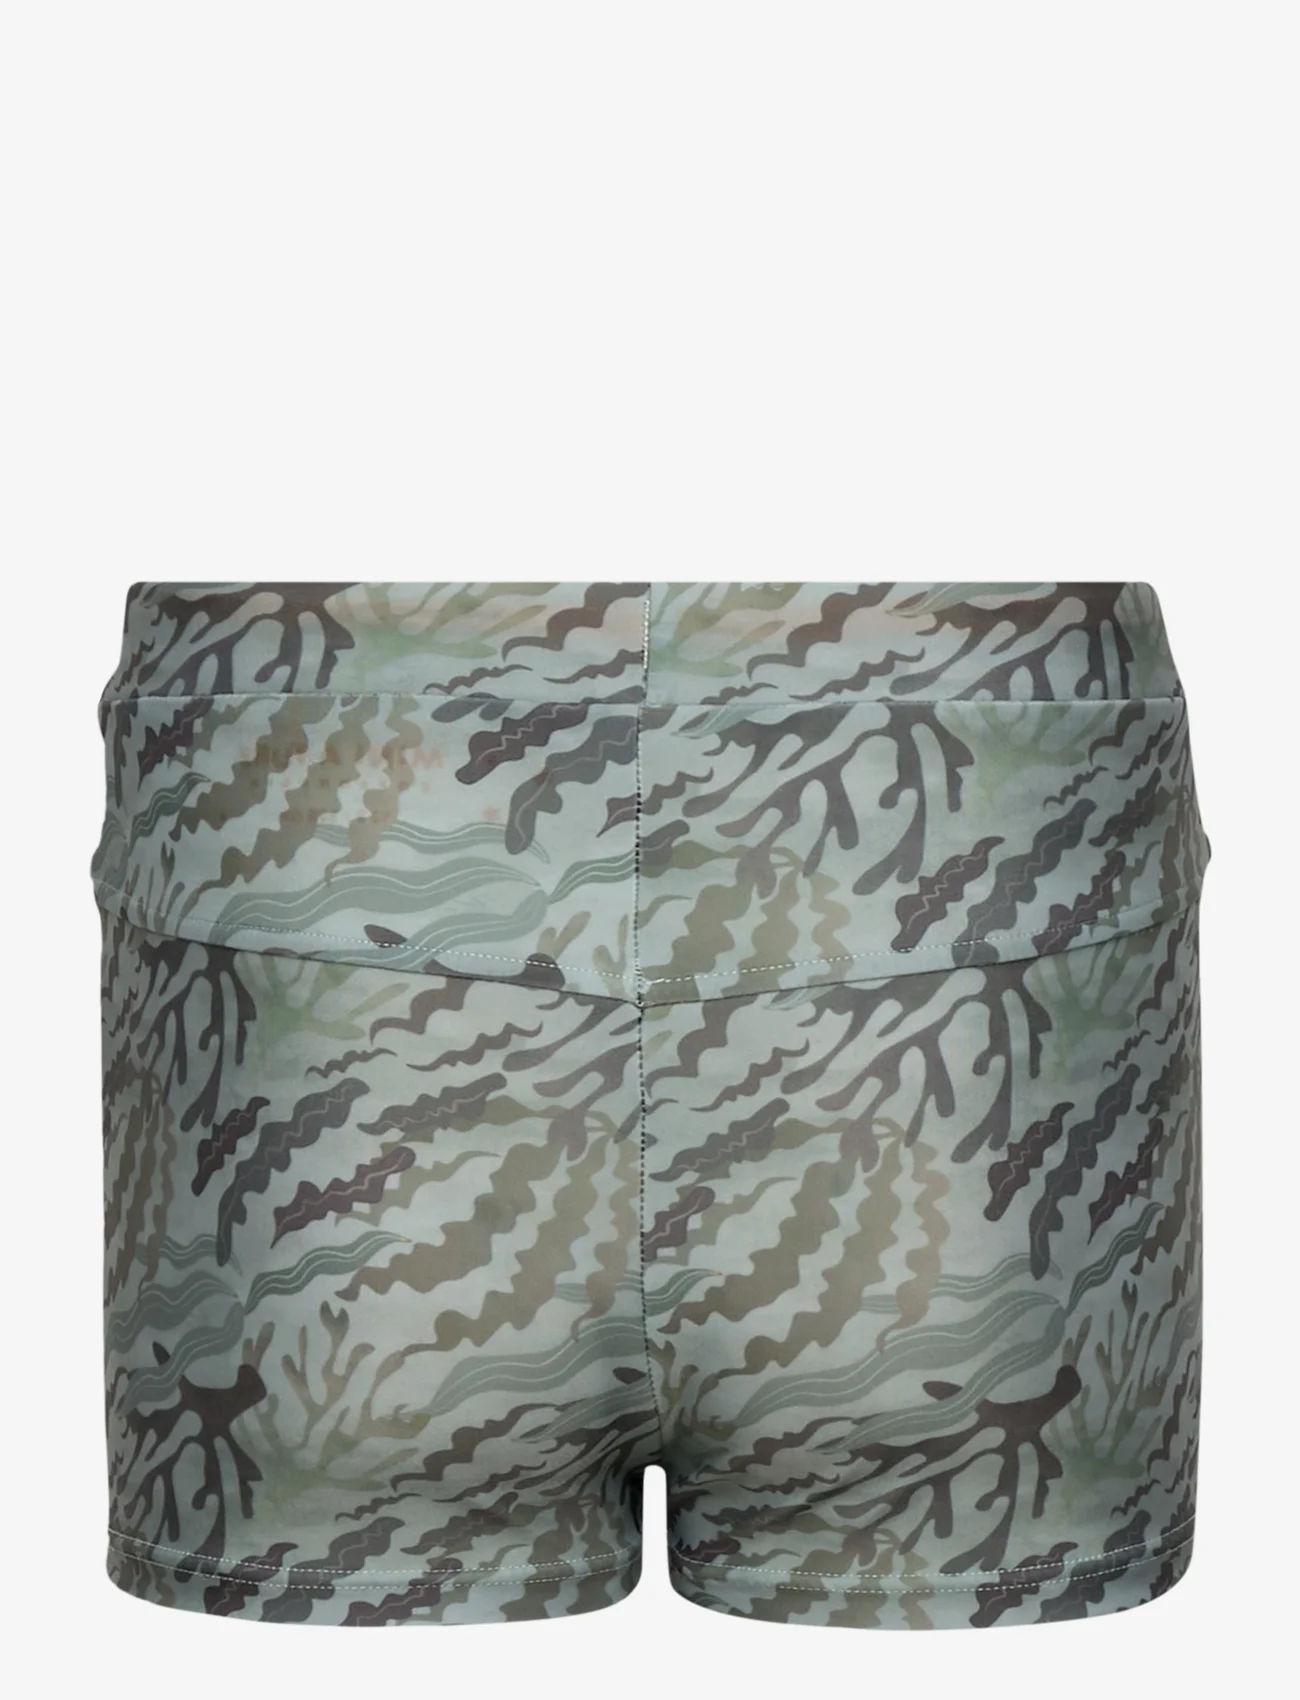 Mini A Ture - Gerryan printed swim shorts - gode sommertilbud - print sea weed camo - 1